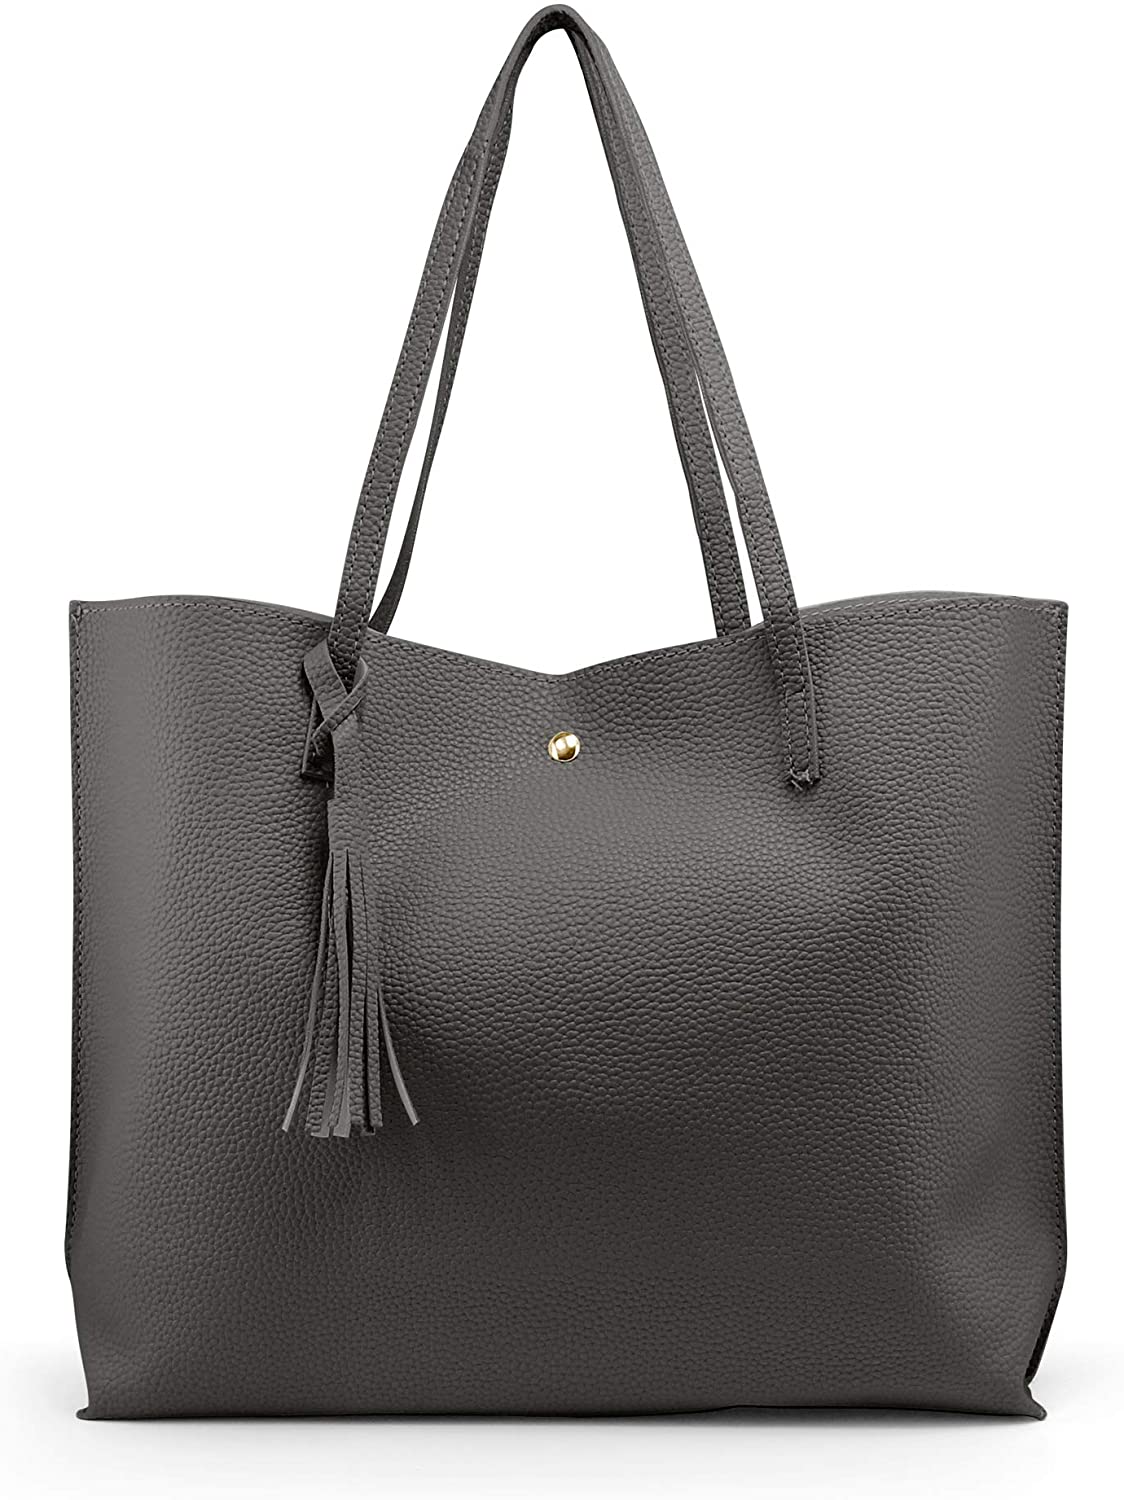 Oct17 Women Large Tote Bag - Tassels Faux Leather Shoulder Handbags, Fashion Lad